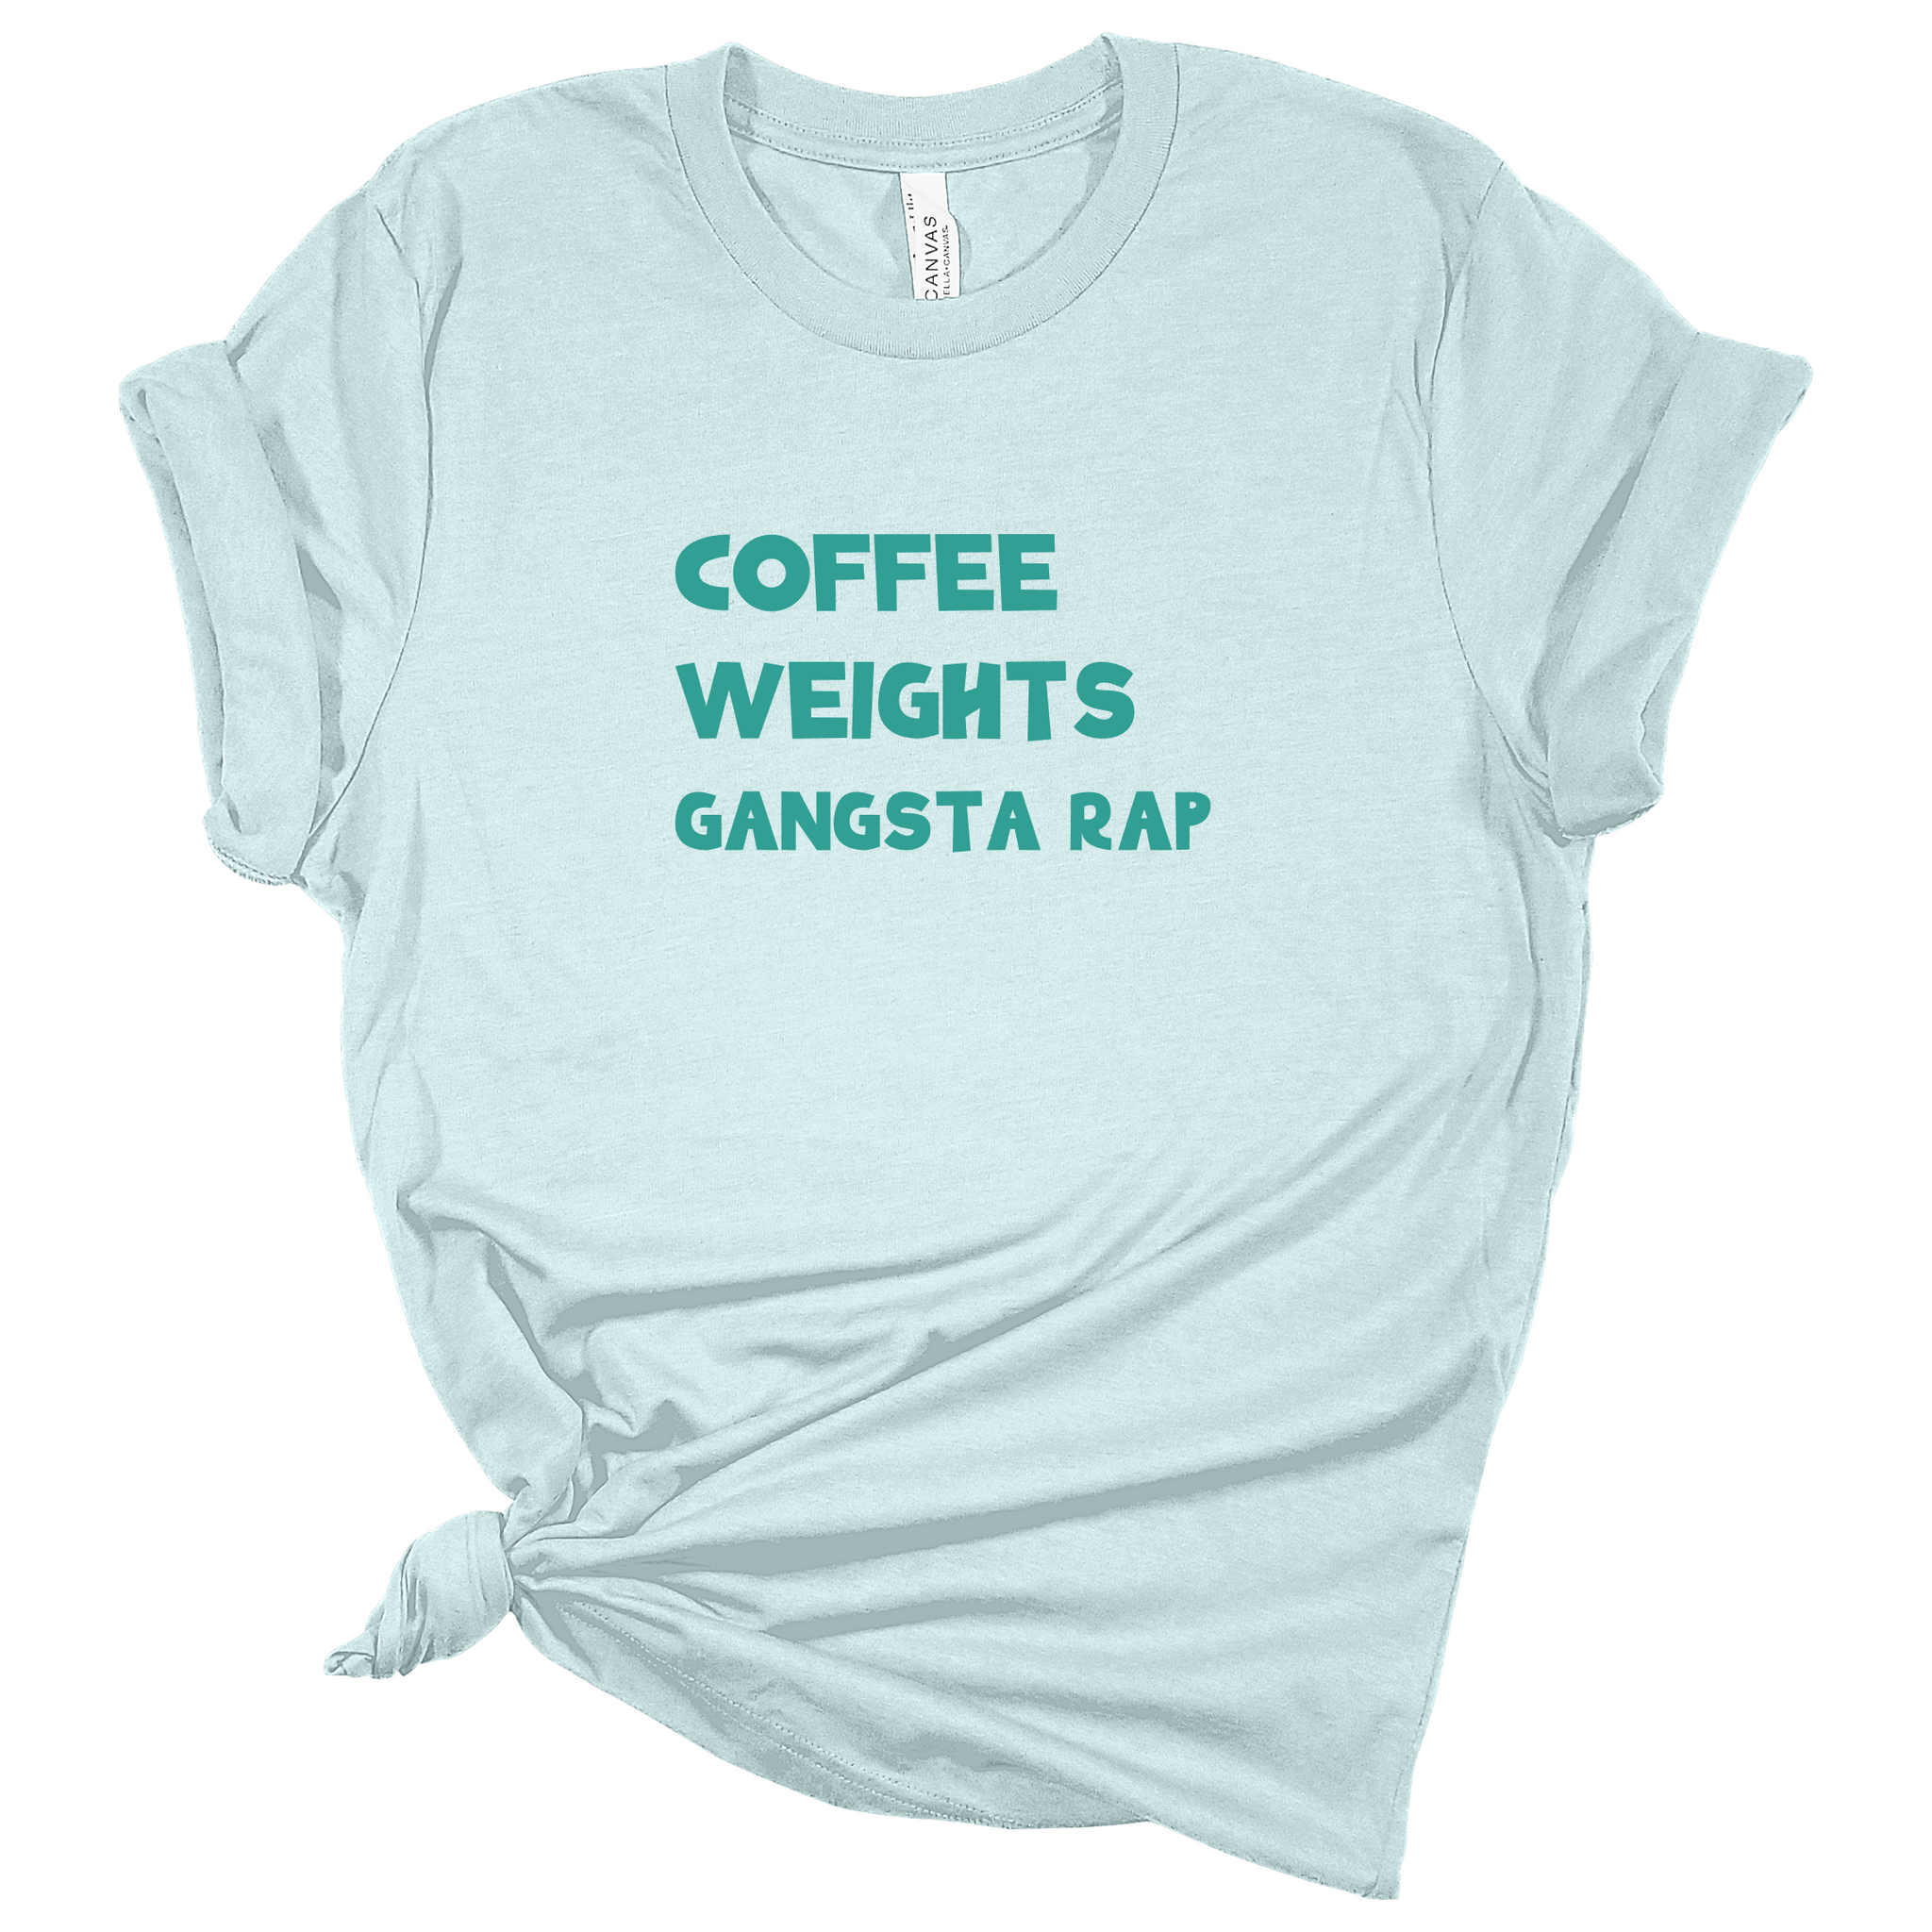 Coffee Weights Gangsta Rap - Light Blue Tshirt - Adult & Women's Gym Top - S004